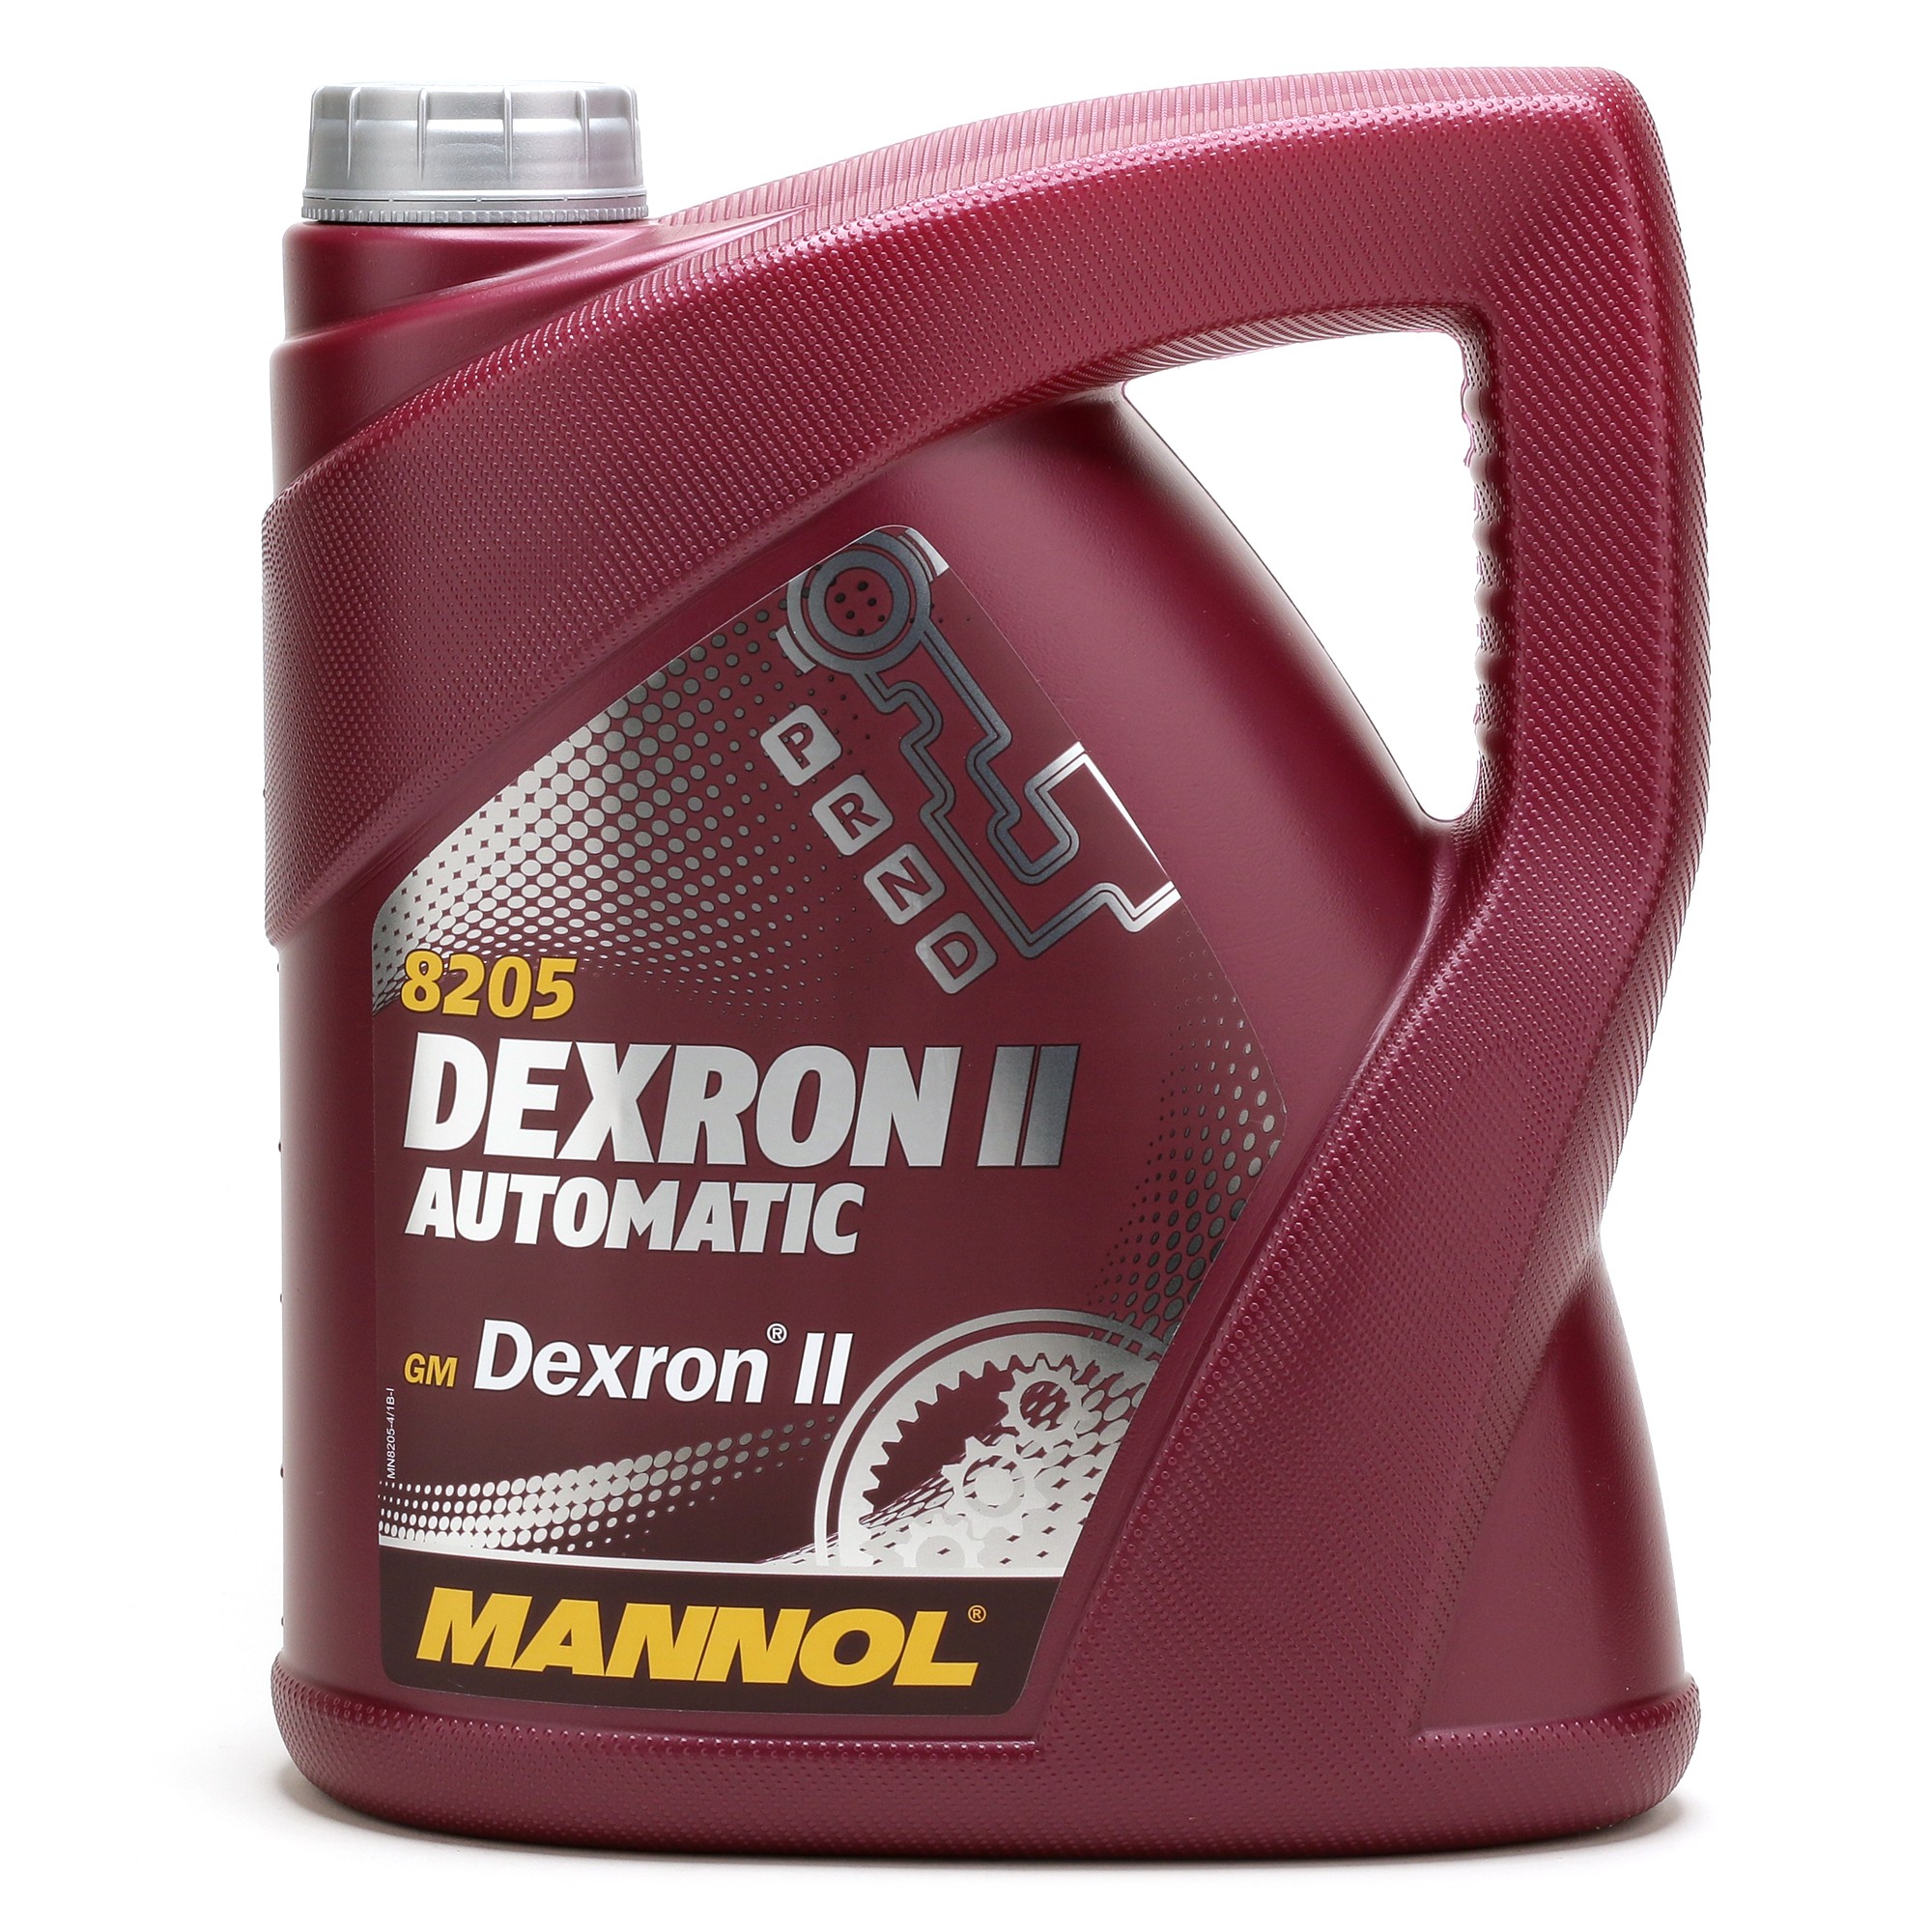 Mannol 8205 ATF Dexron II Automatic 4 Liter